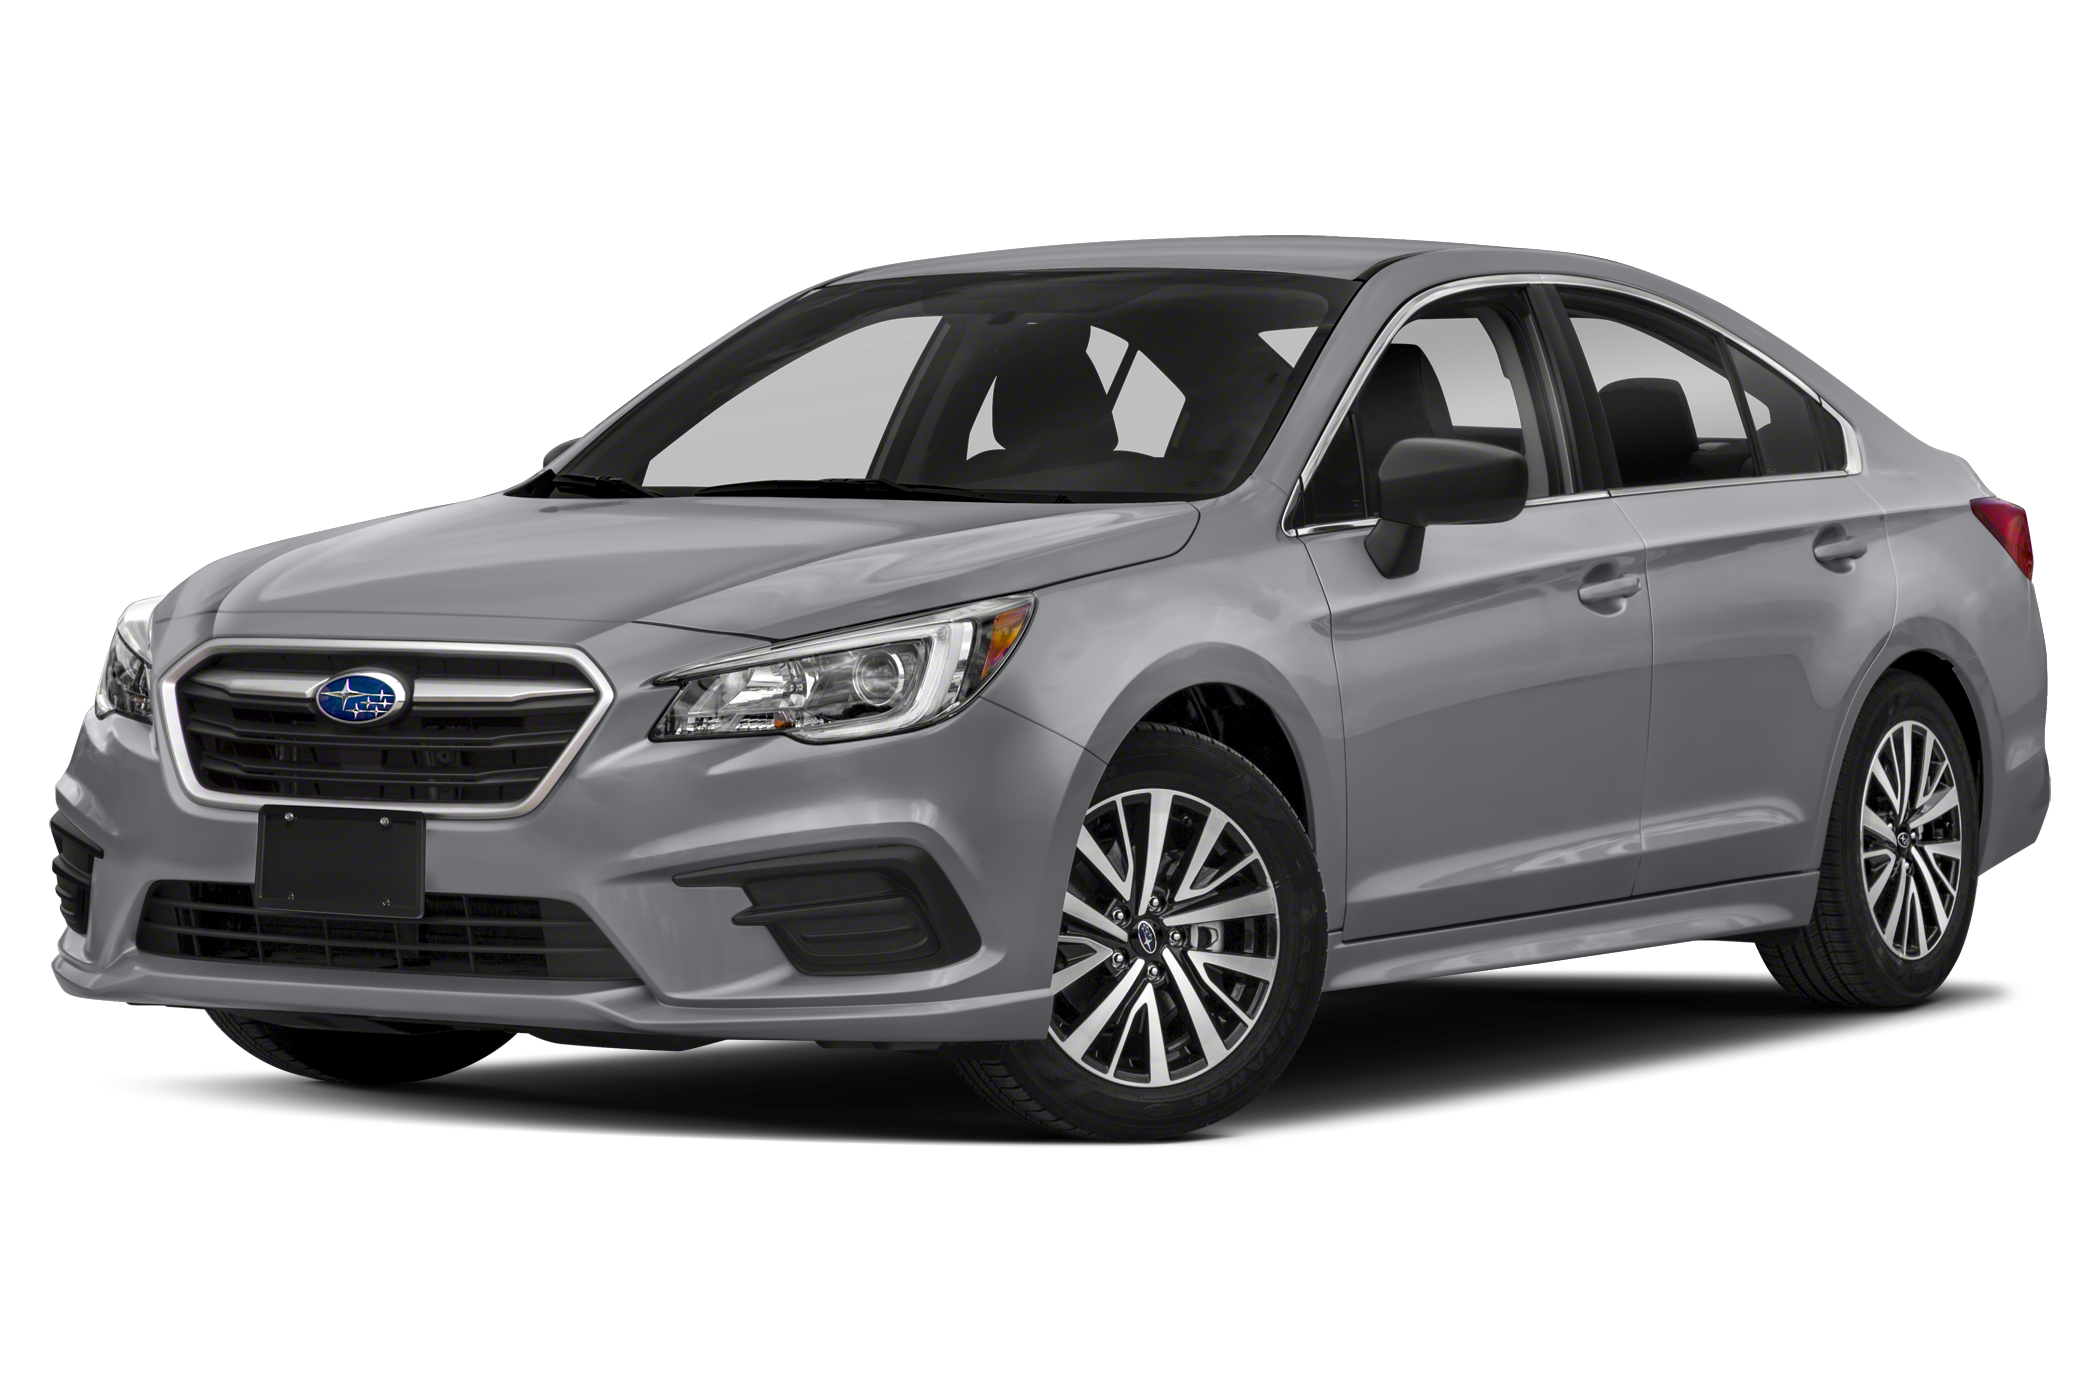 2018 Subaru Legacy View Specs, Prices & Photos WHEELS.ca